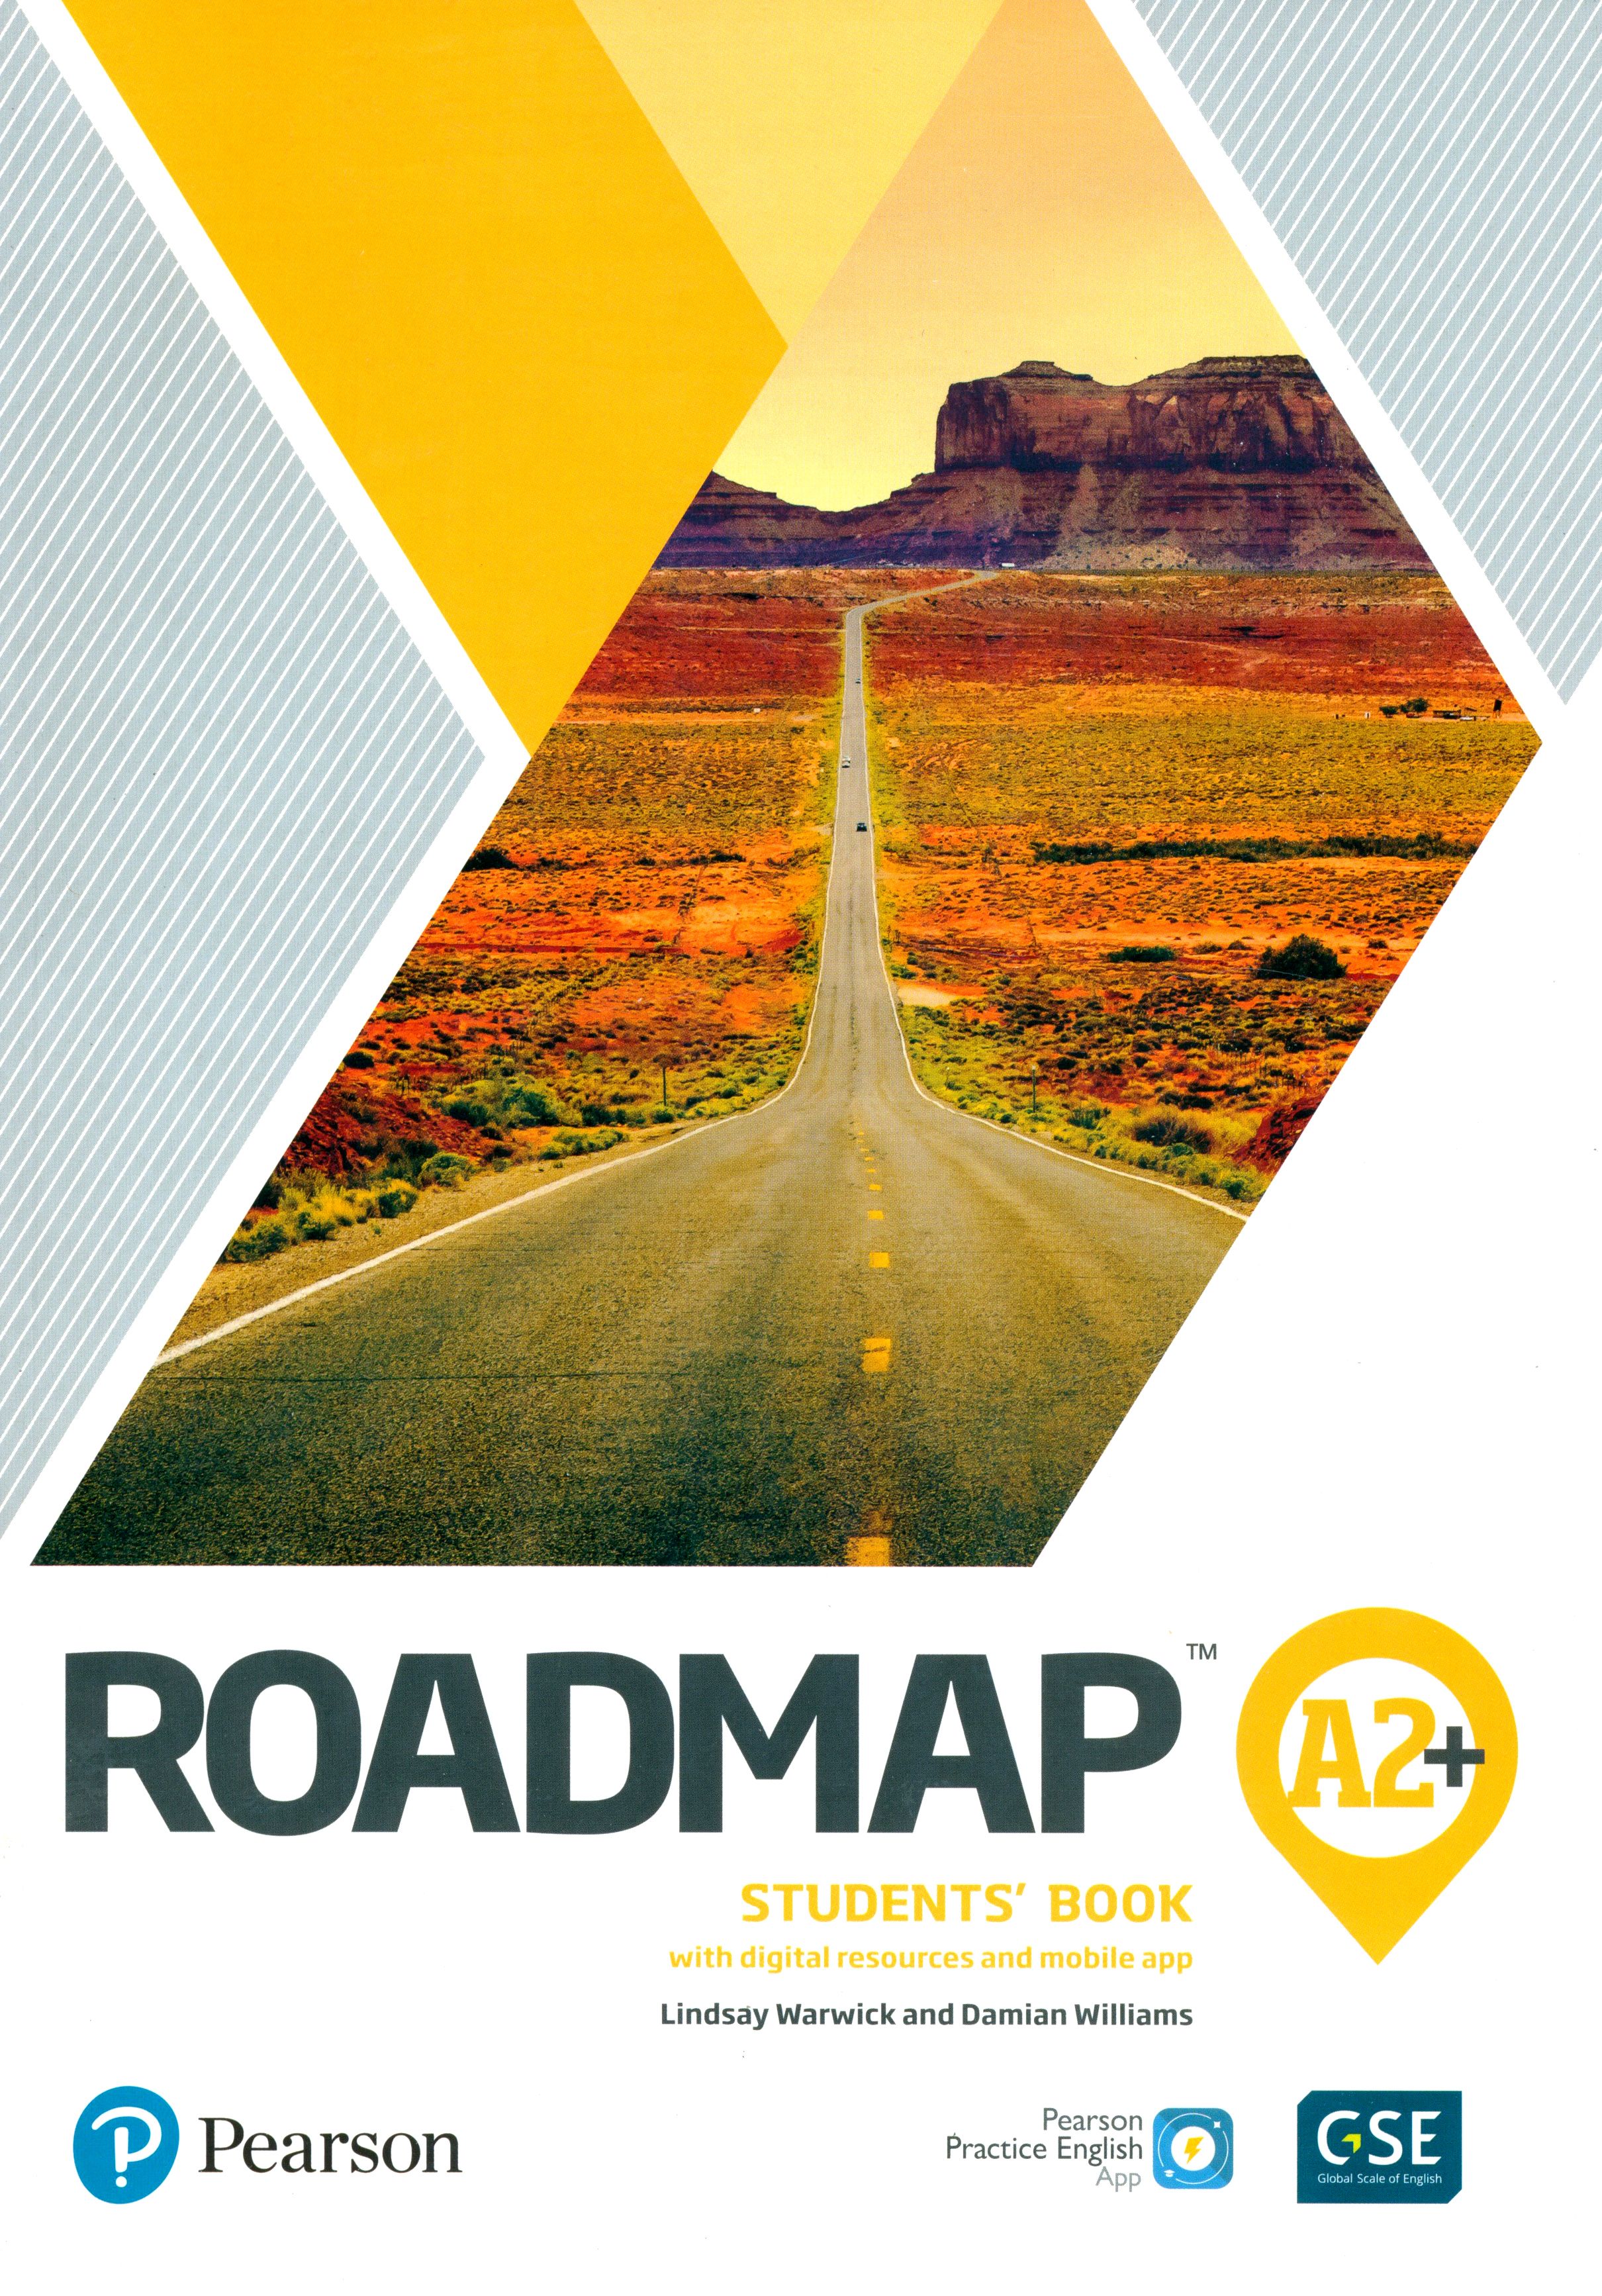 Roadmap student s book. Roadmap a2+ students' book. Roadmap books. Roadmap Workbook.